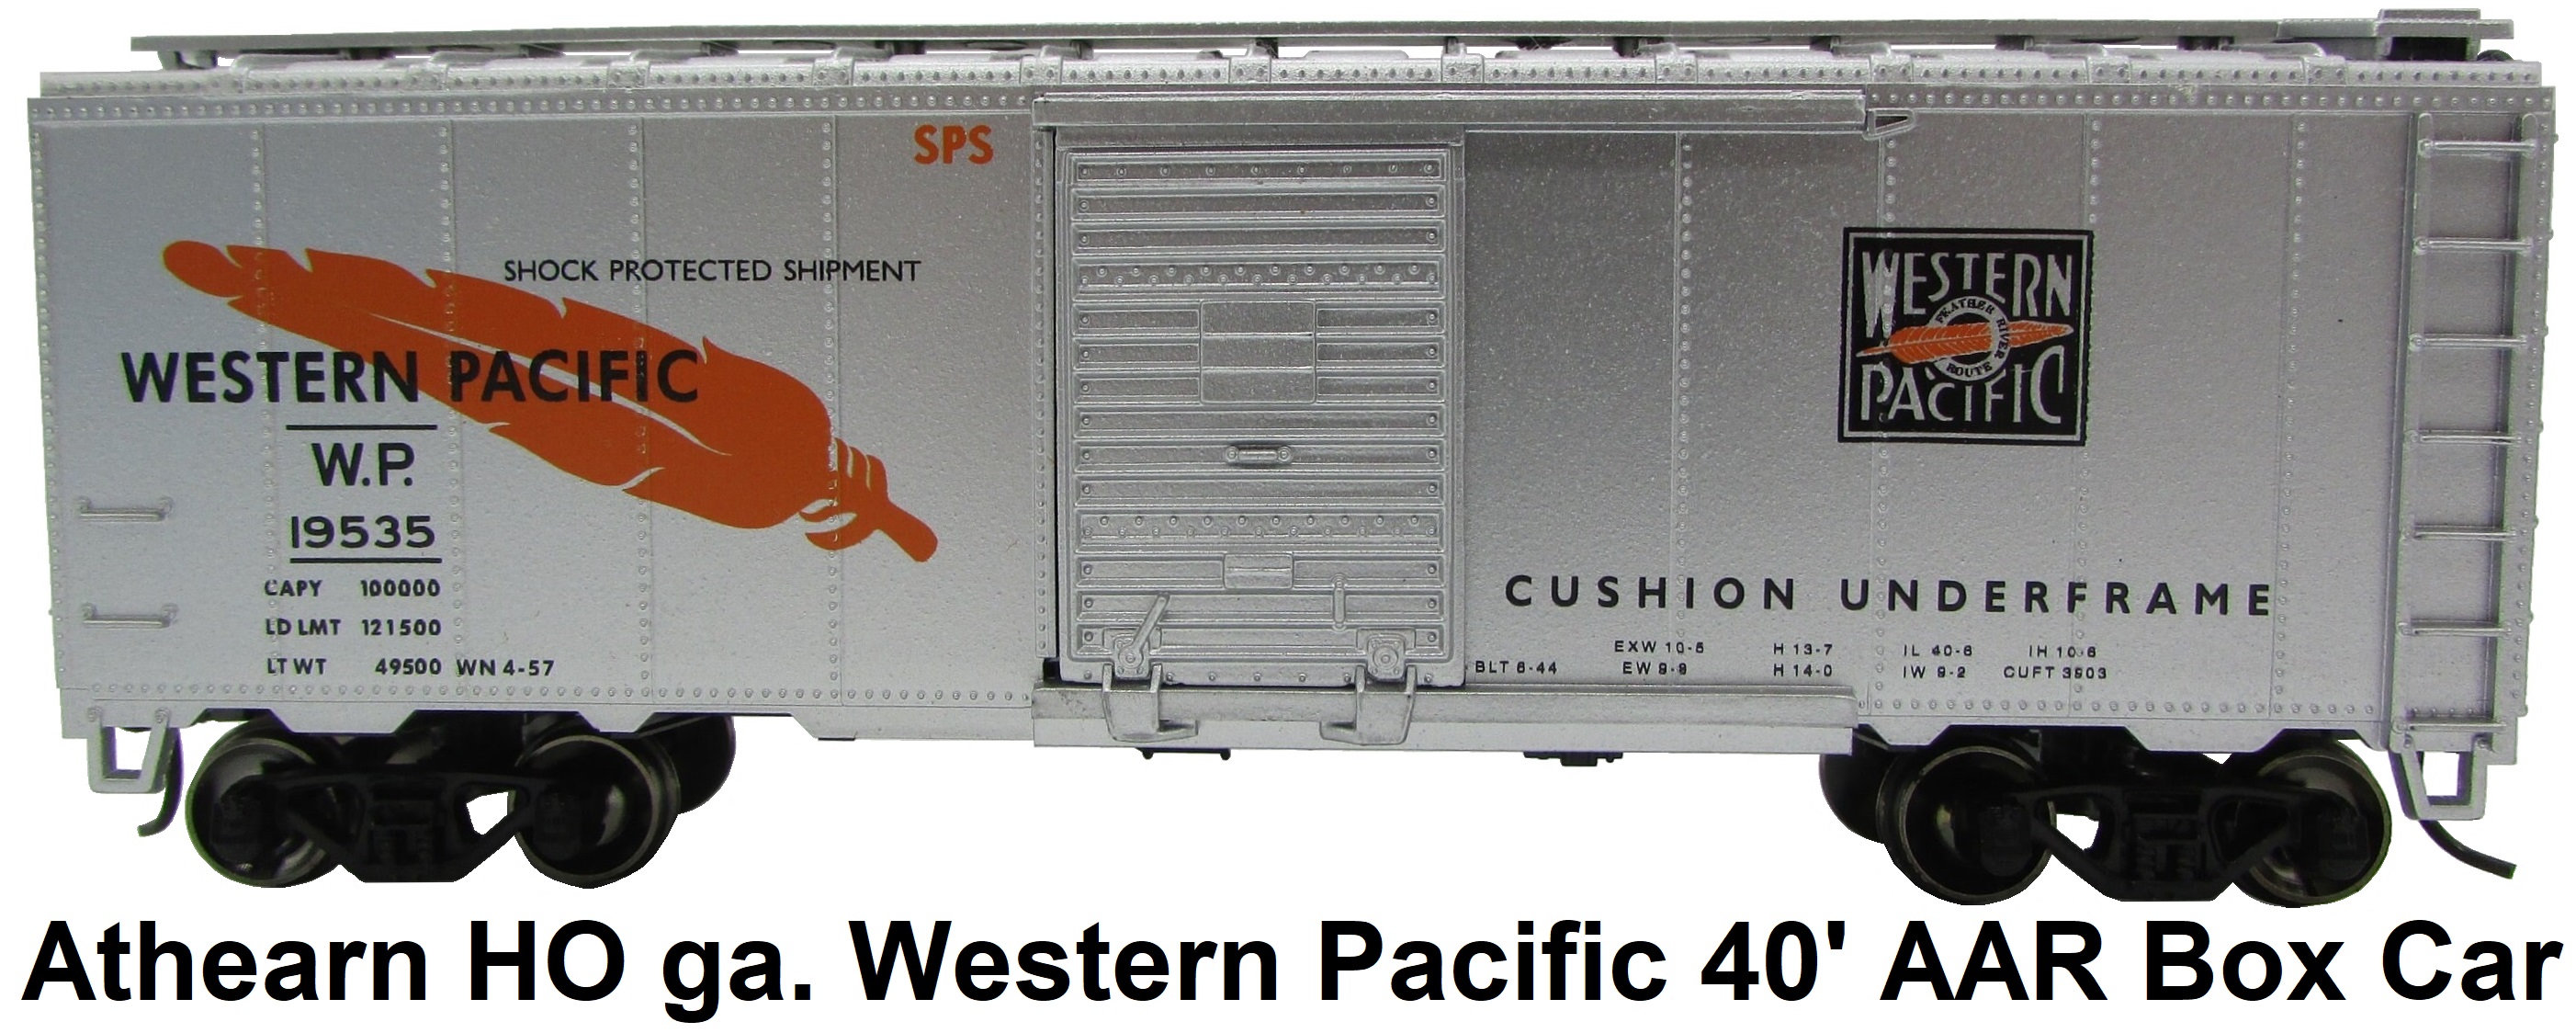 Athearn HO Scale Blue Box Western Pacific 40' AAR Box Car